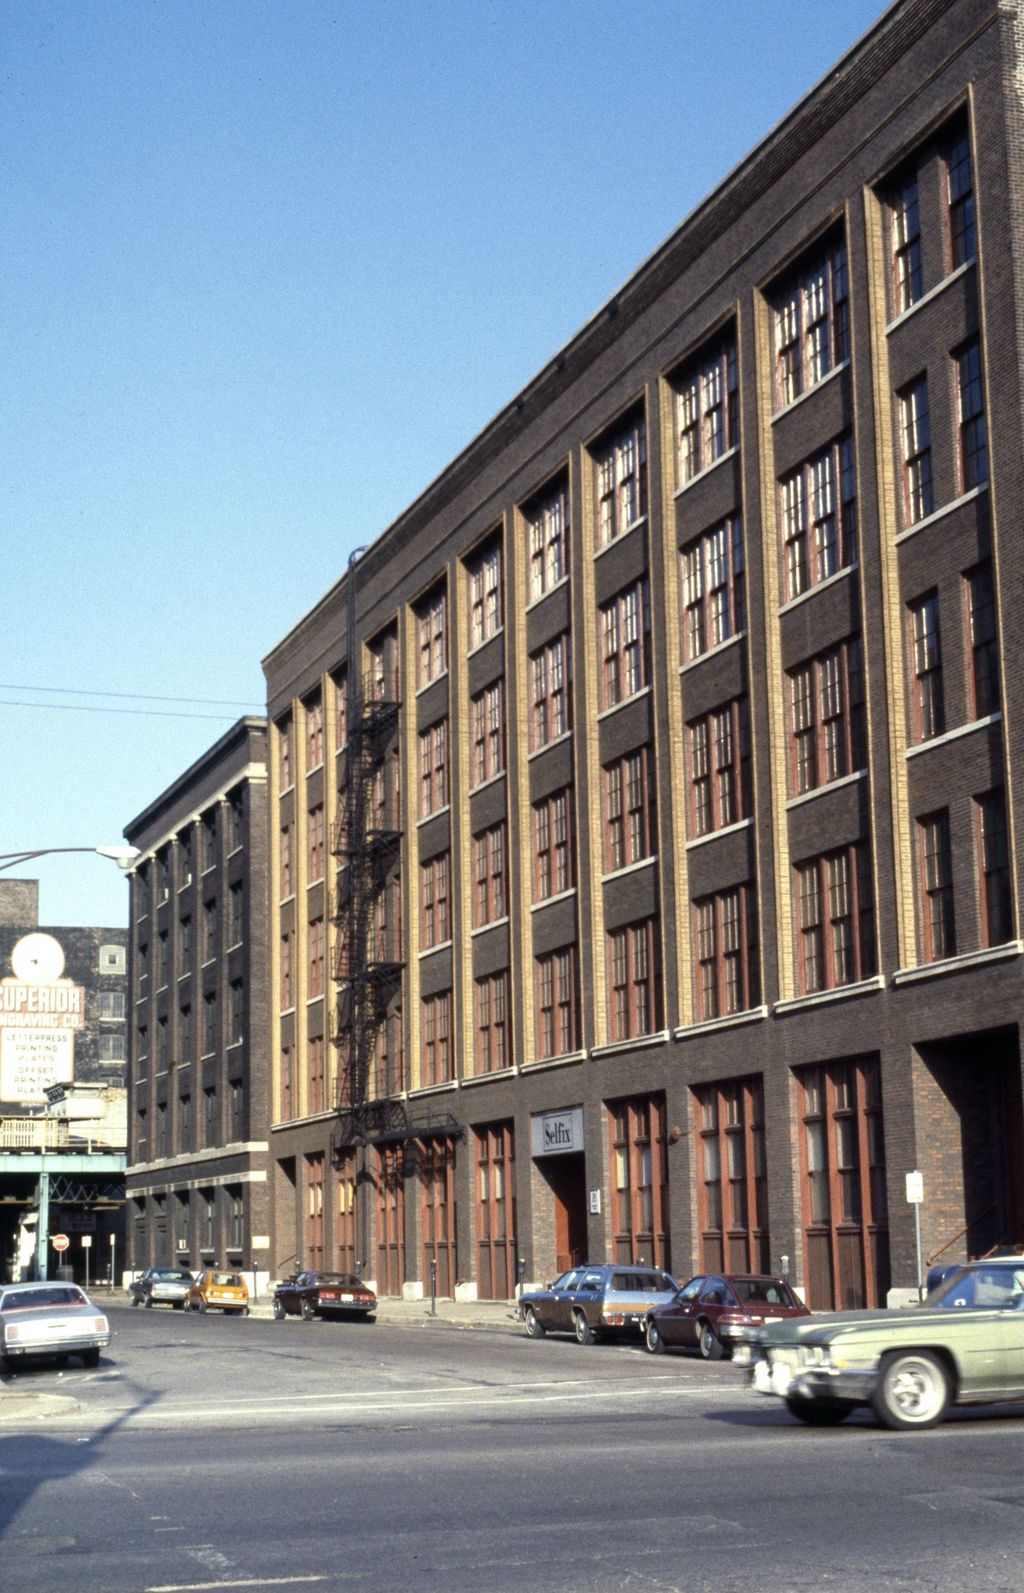 Miniature of Industrial buildings, West Superior Street